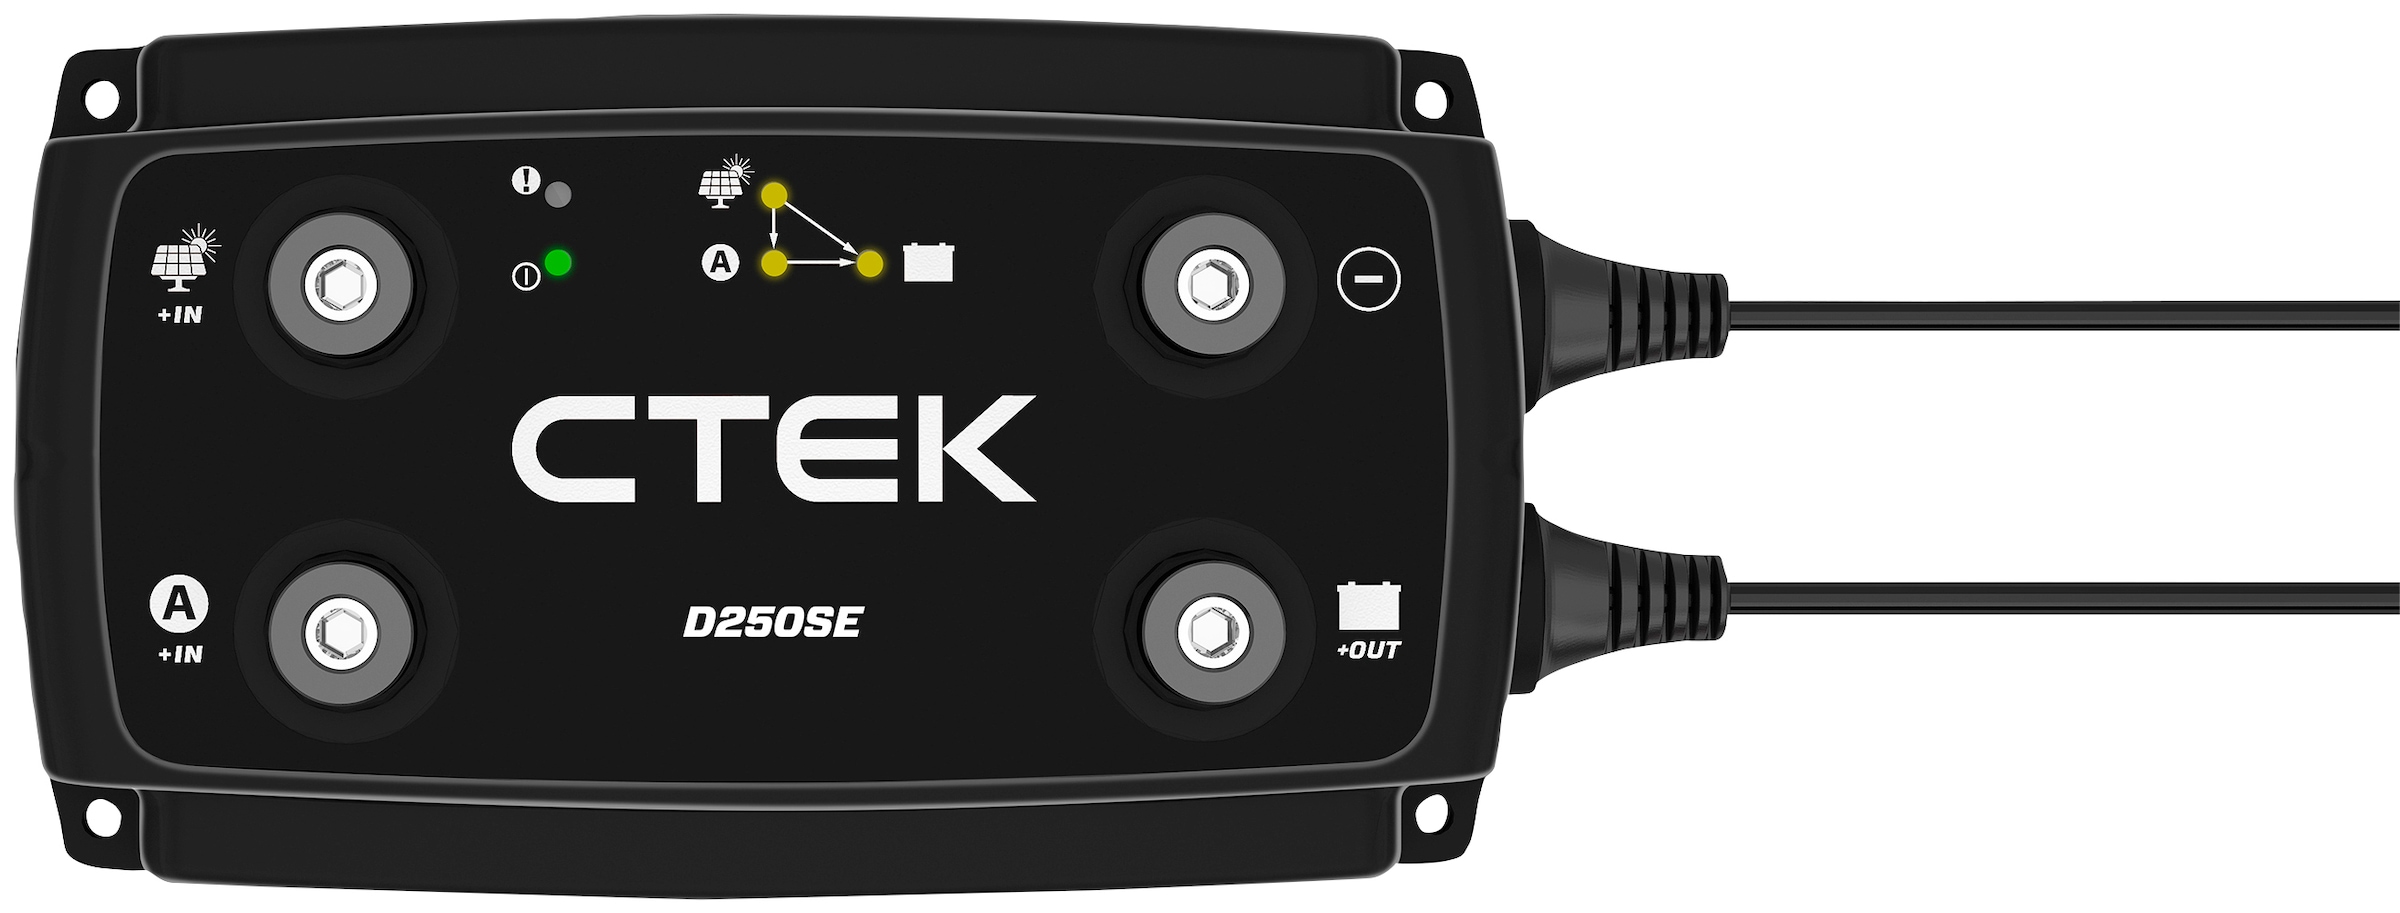 CTEK Batterie-Ladegerät »D250SE«, Temperatursensor zur Optimierung des  Ladevorgangs in kalten Umgebungen